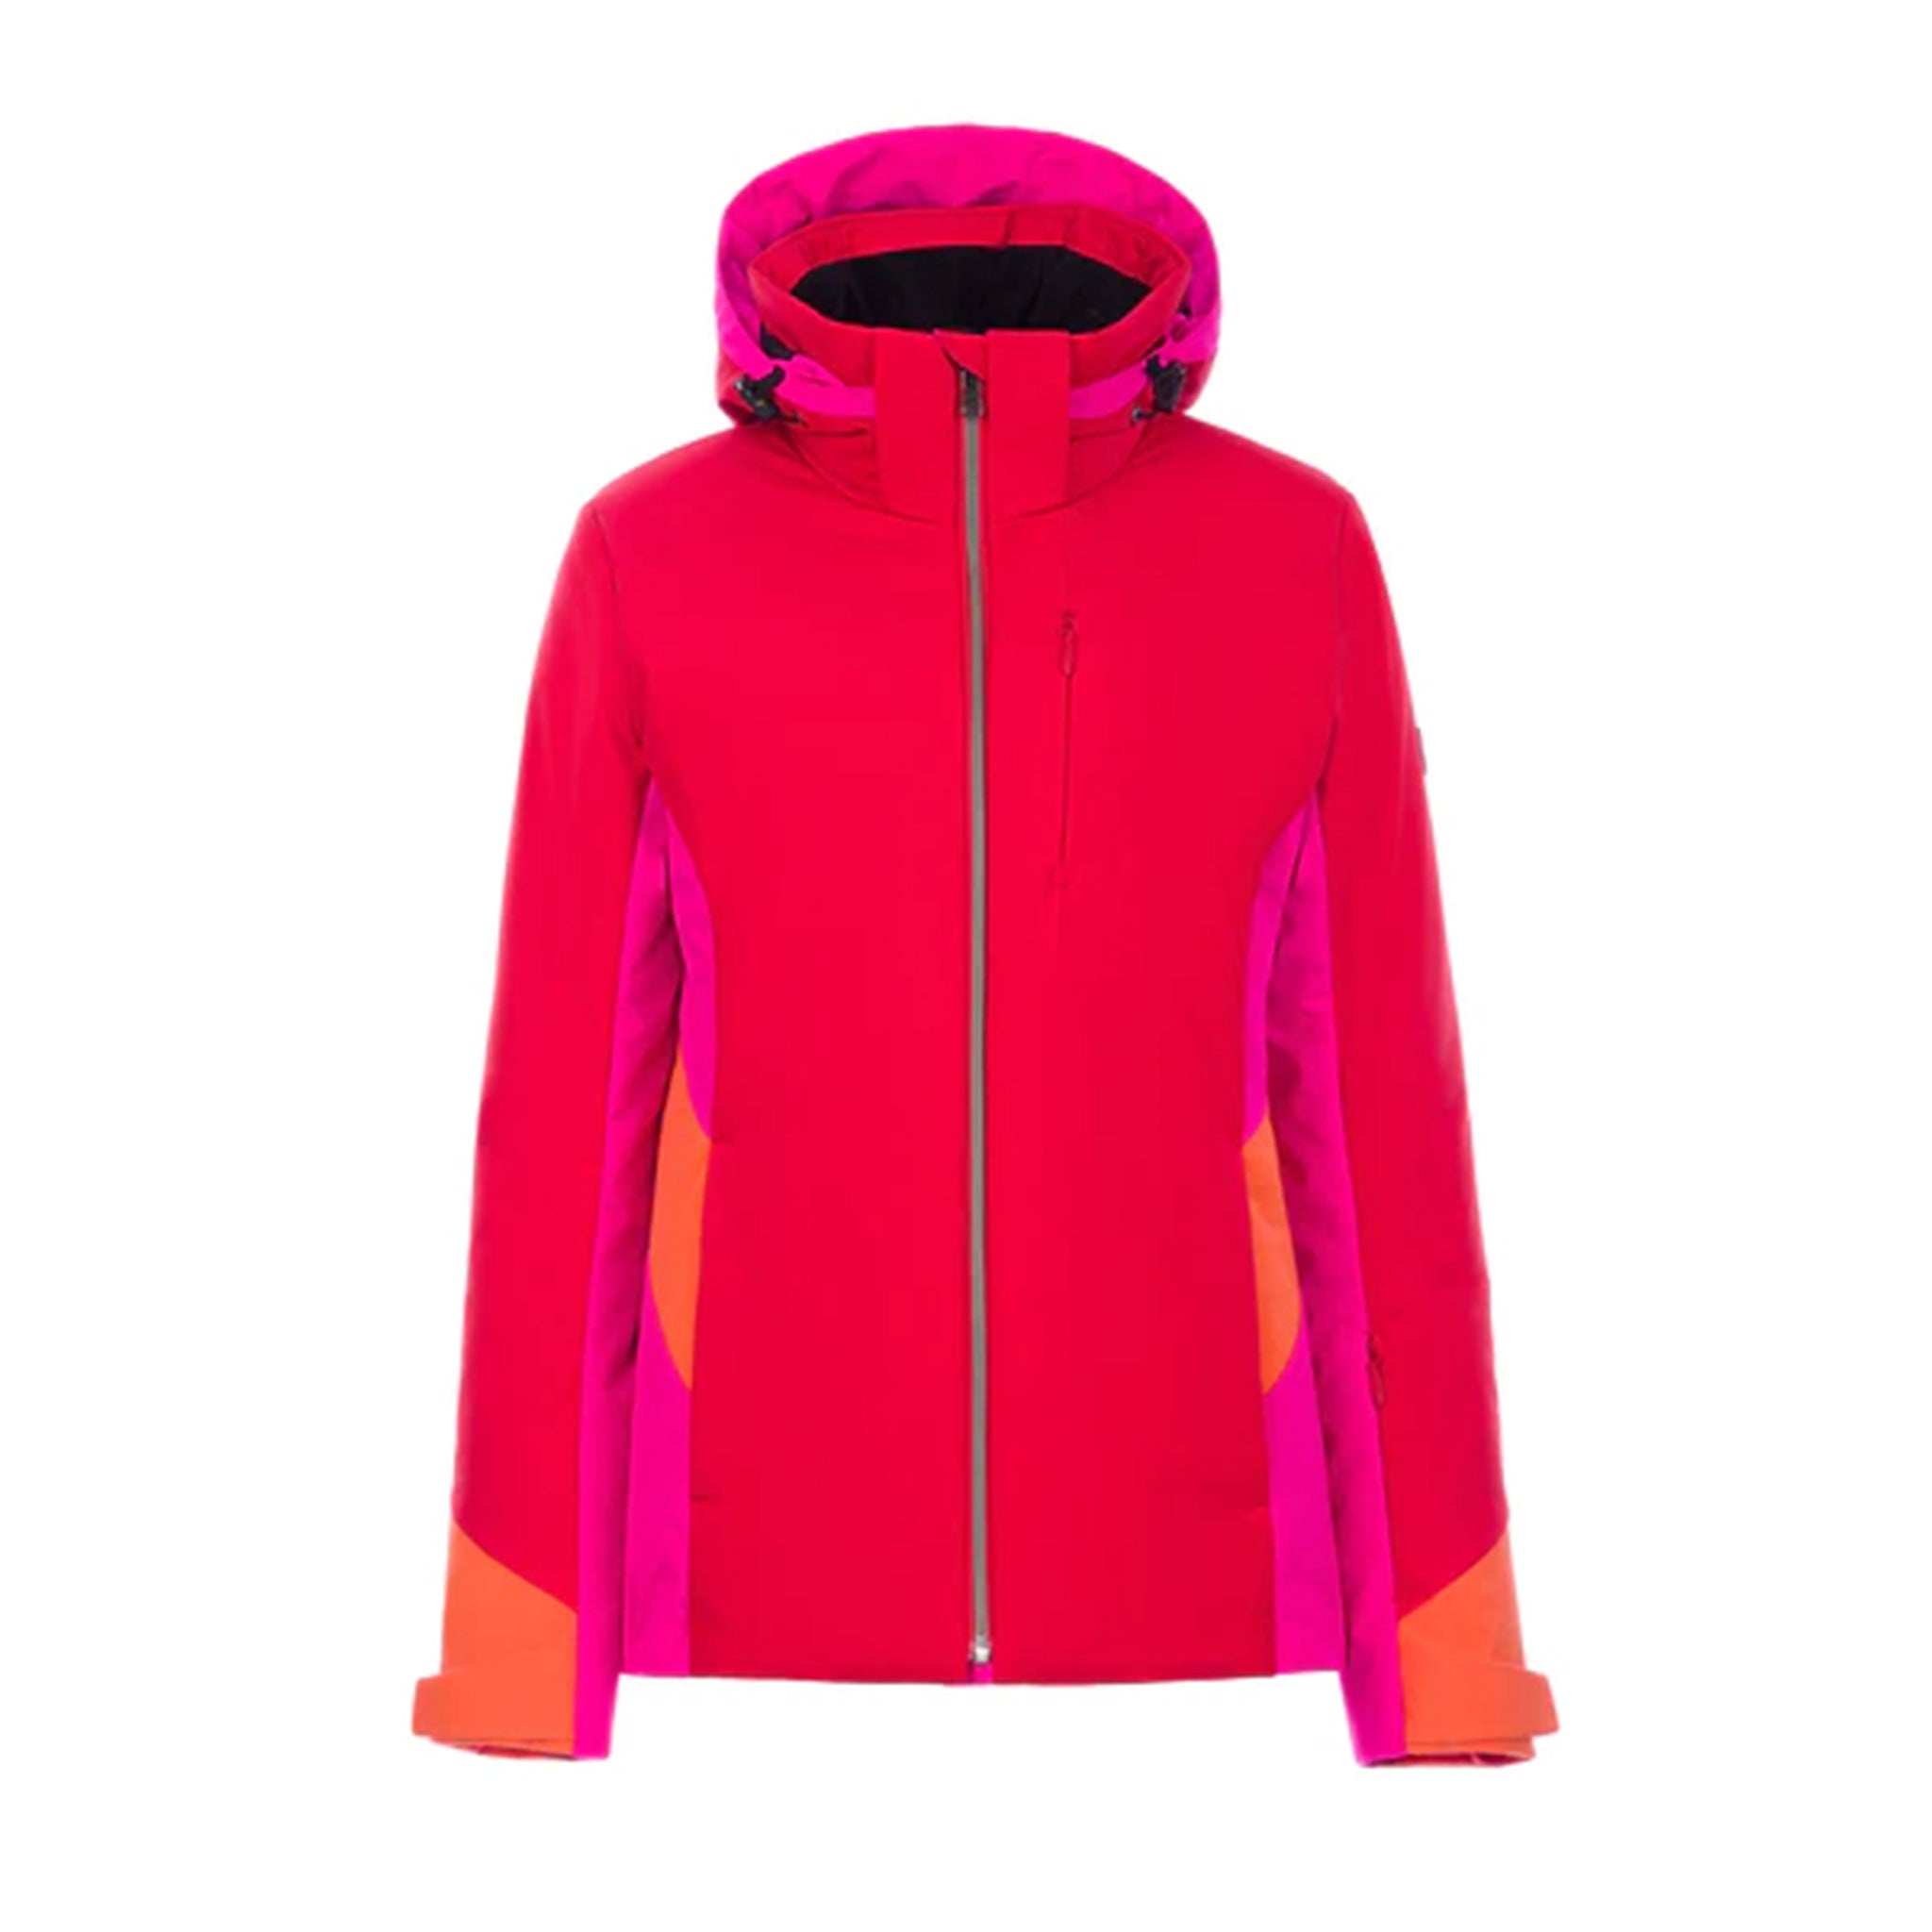 Avery Ski Jacket in Red